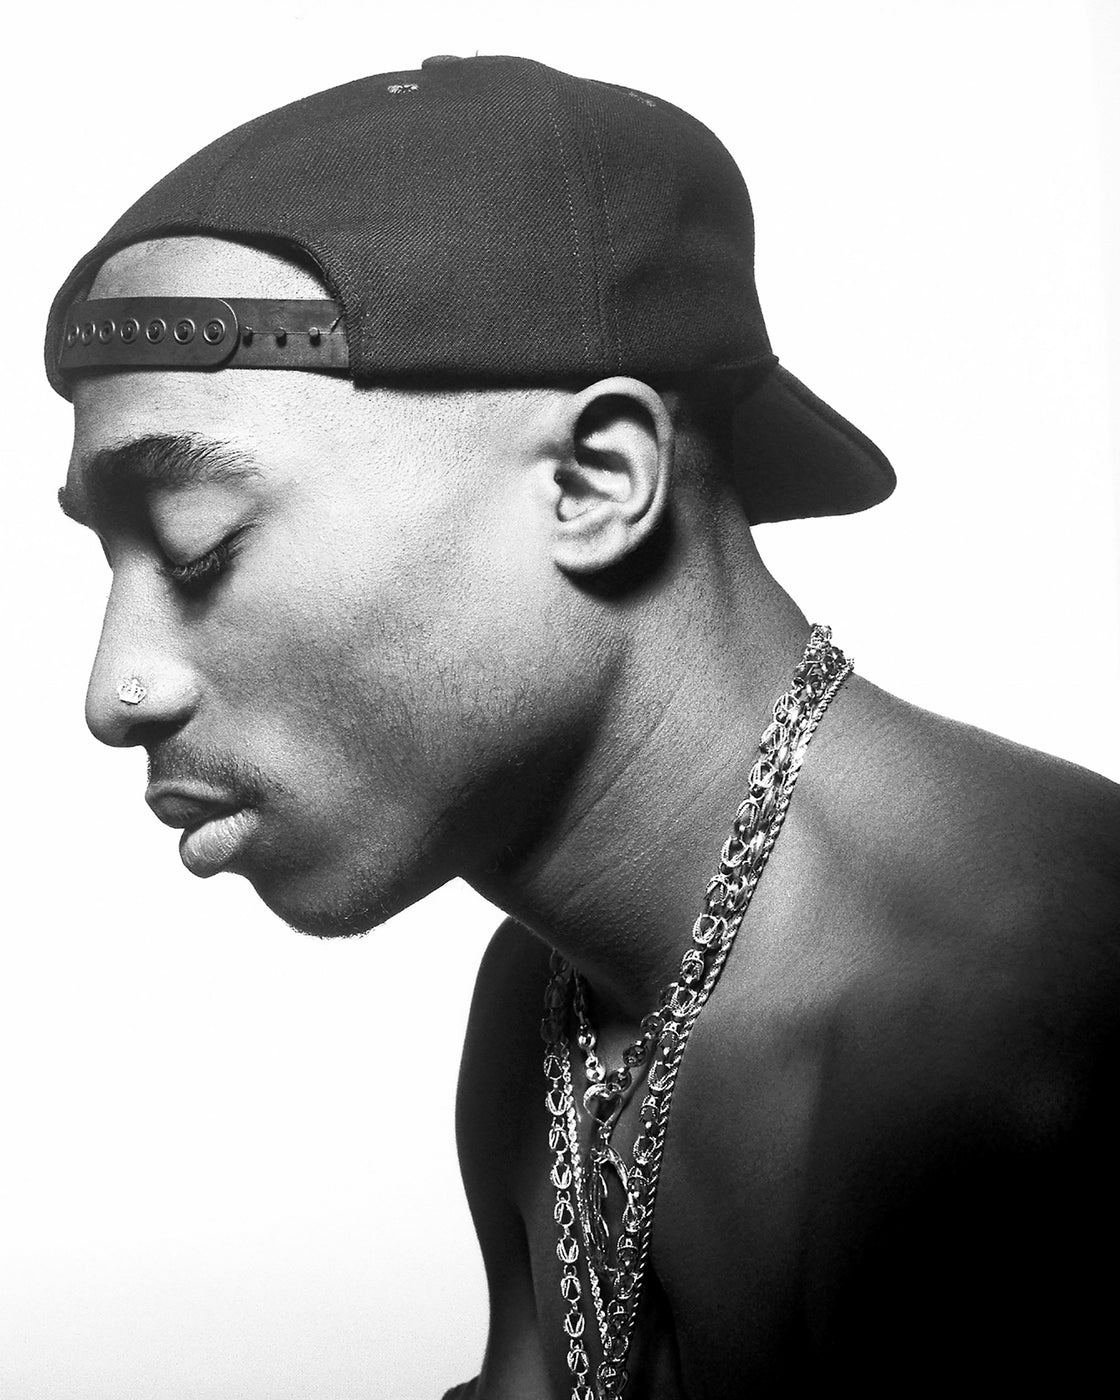 Tupac Shakur signed index card “Thugs & Kisses”